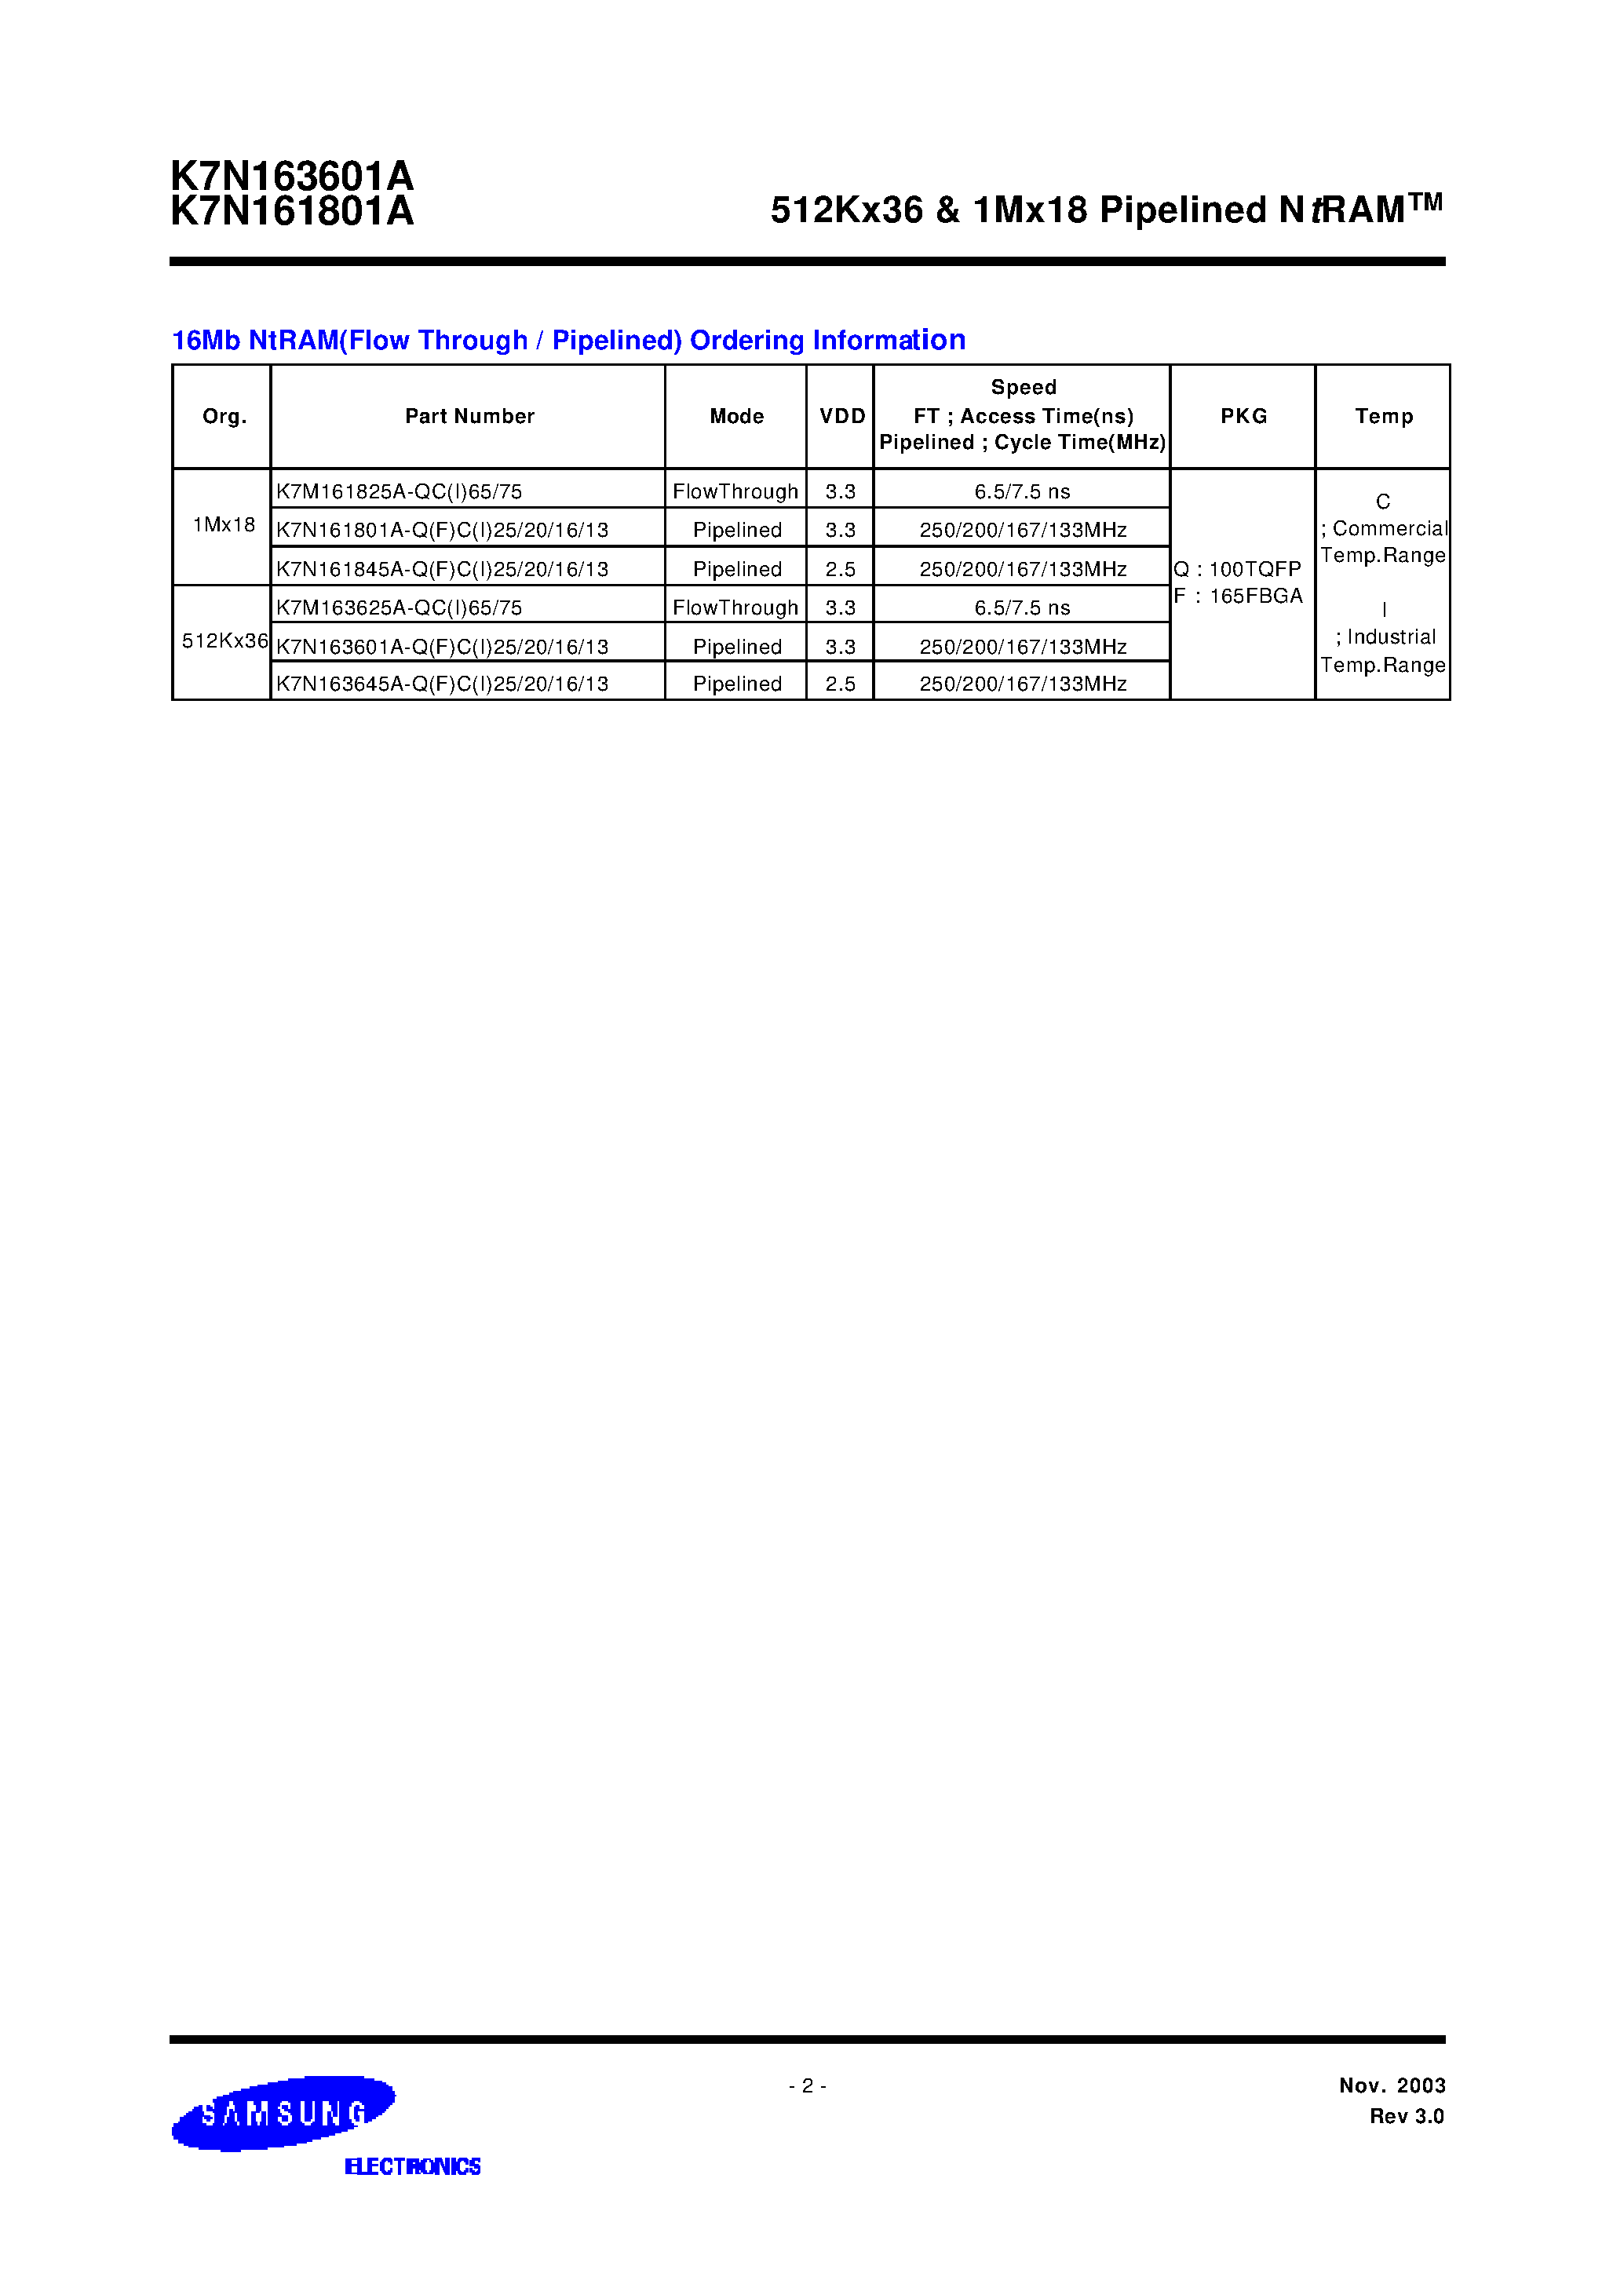 Datasheet K7M163625A-QC(I)75 - 512Kx36 & 1Mx18 Pipelined NtRAM page 2